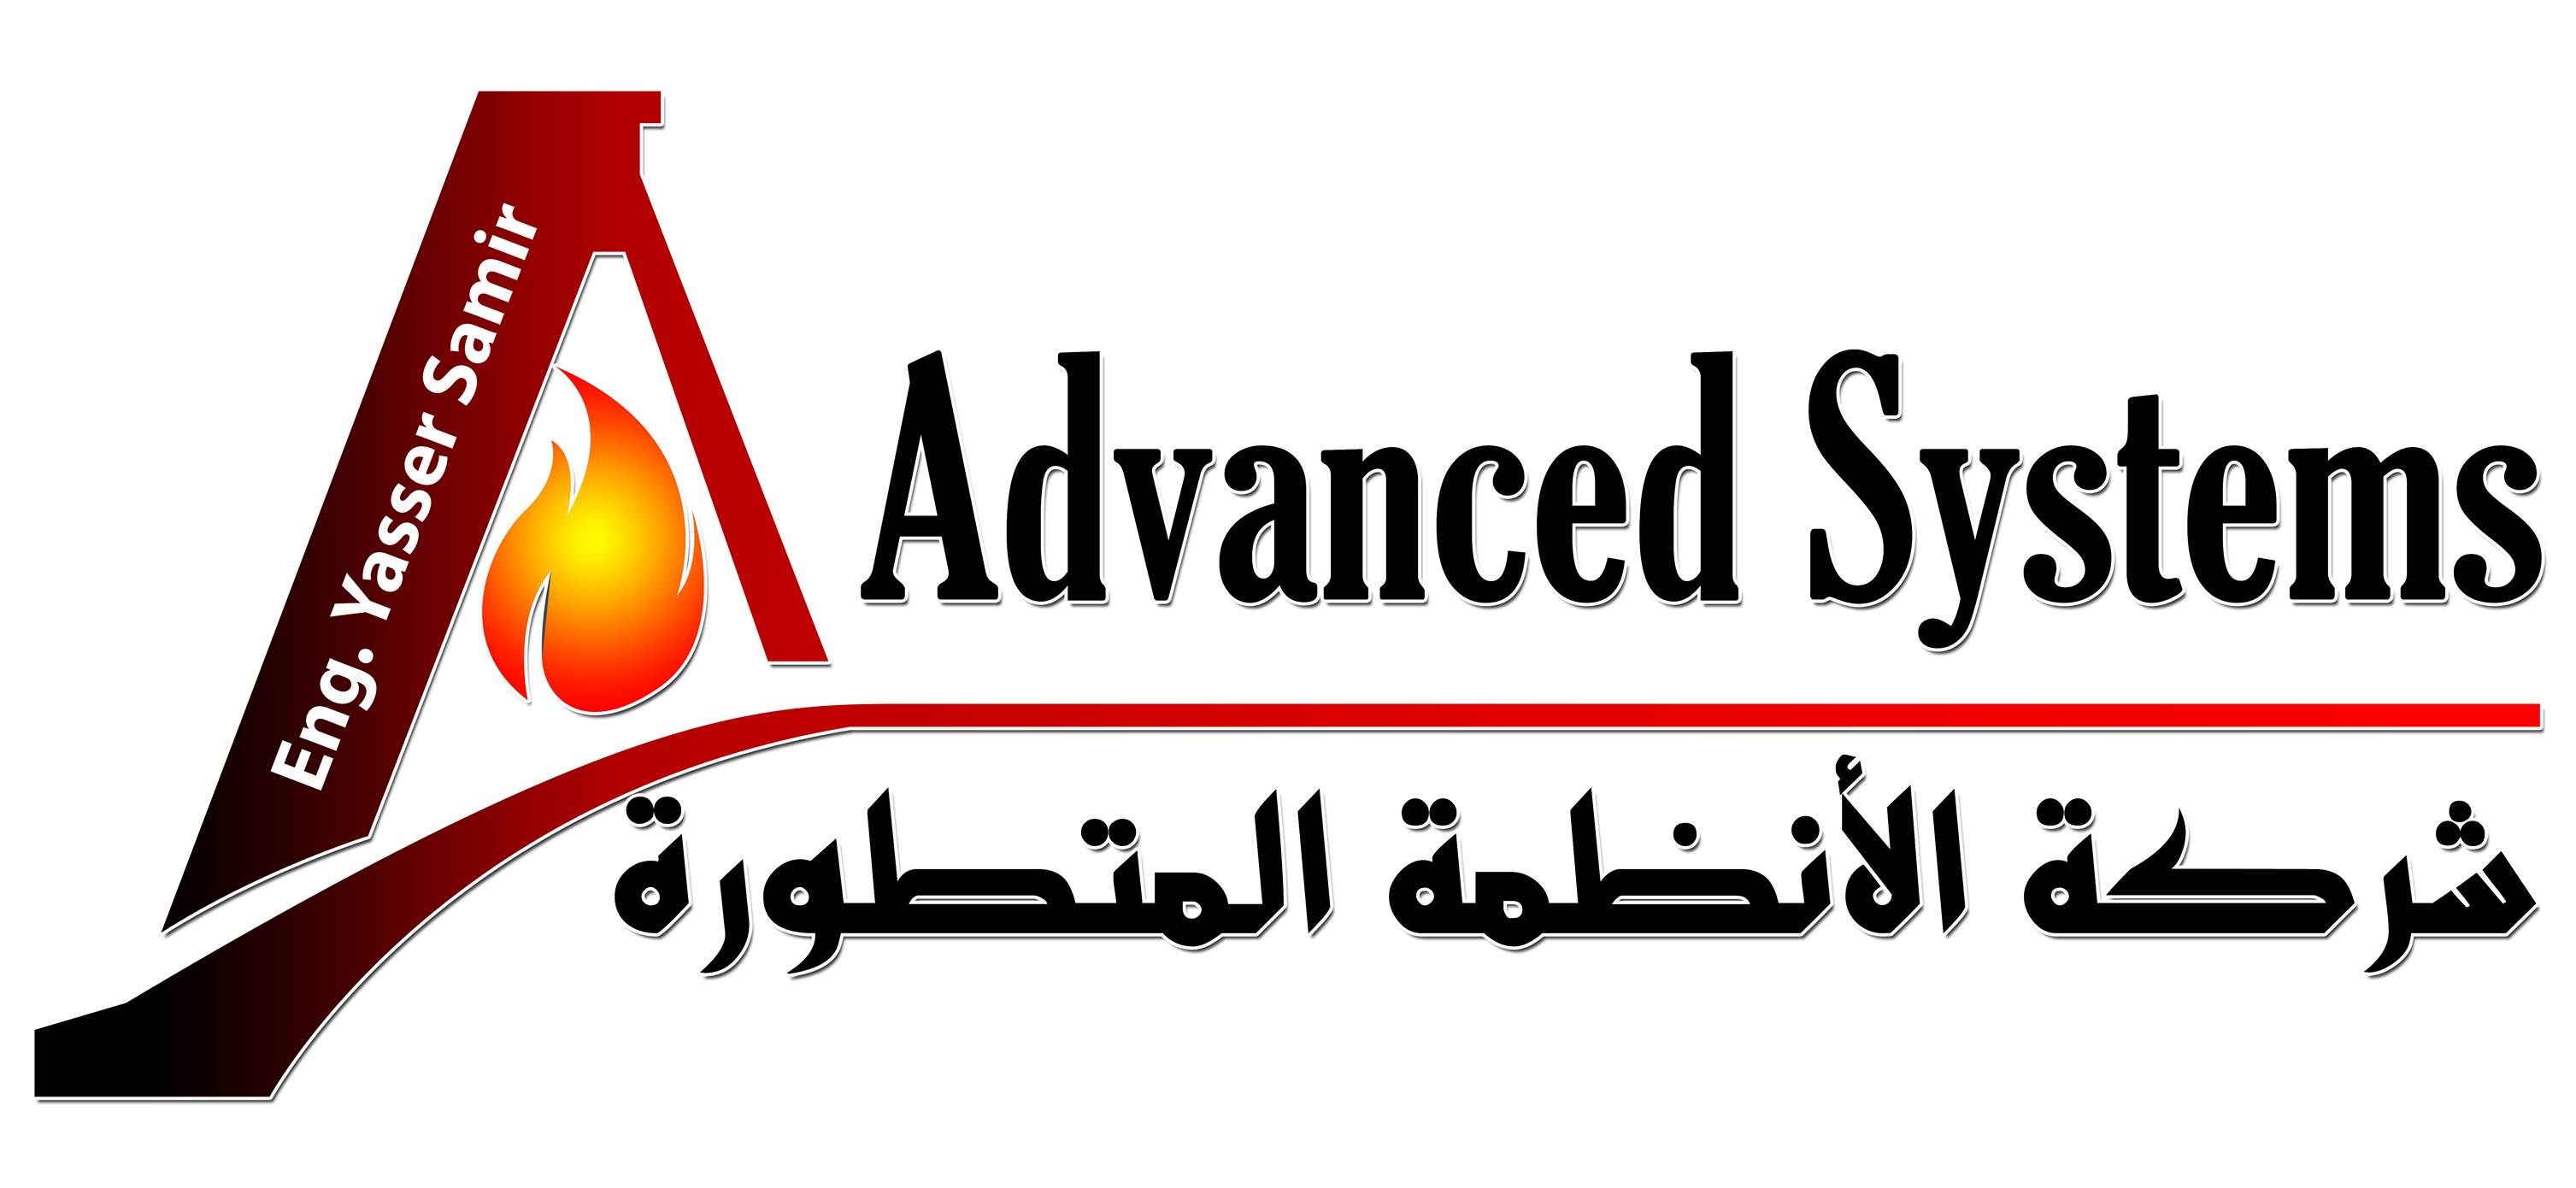 Advanced Systems - logo